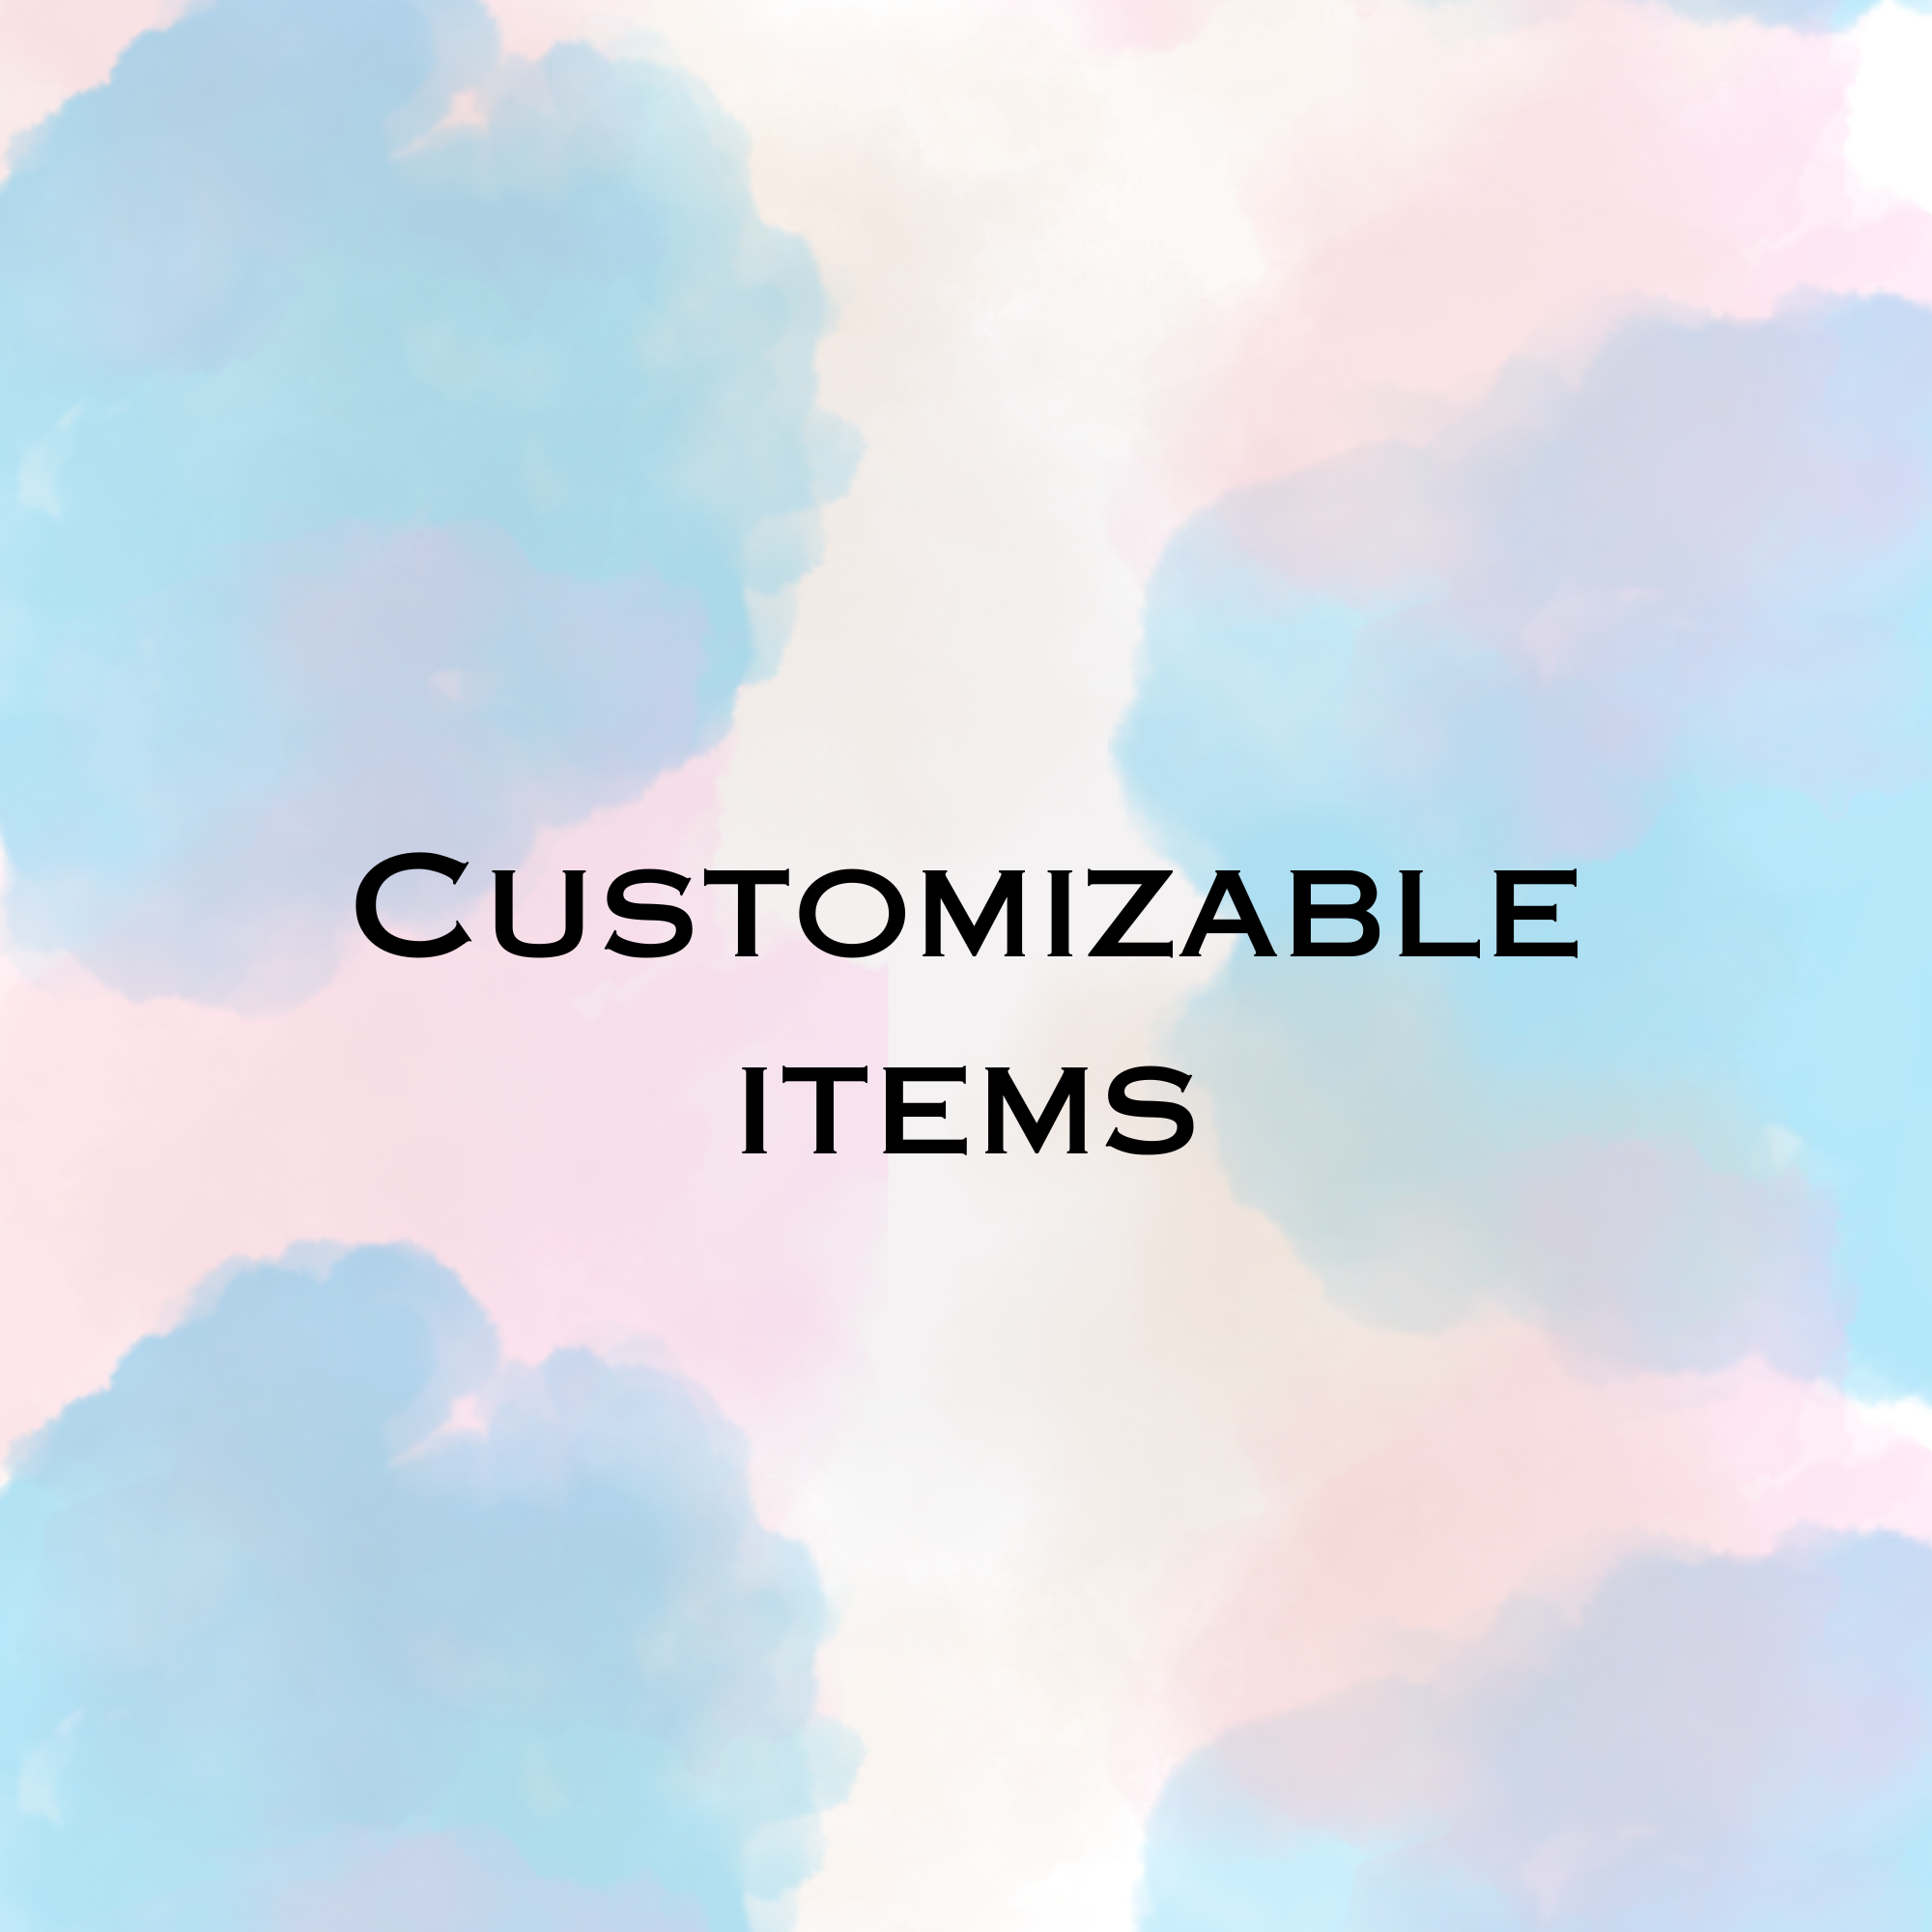 Customizable Items